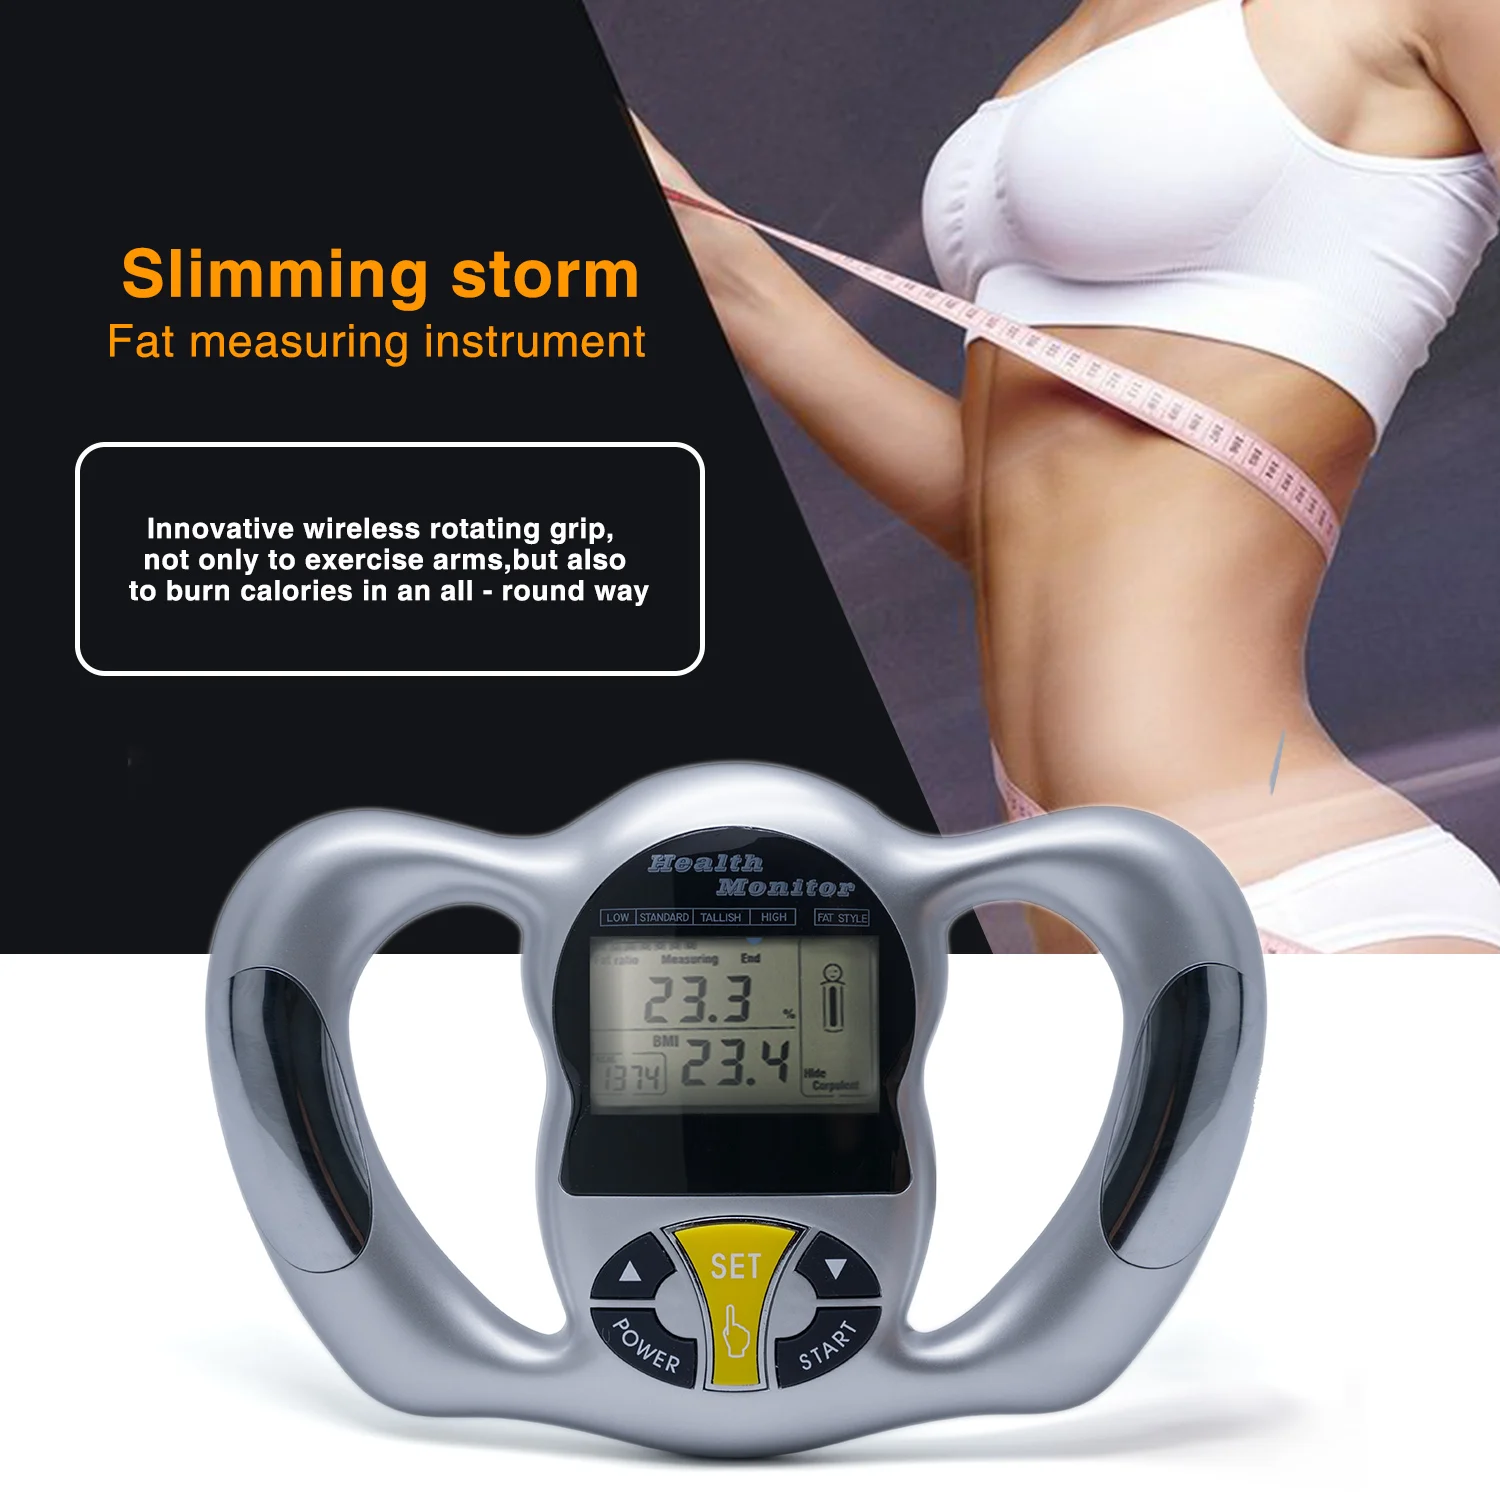 

Body Health Monitor Digital LCD Fat Analyzer BMI Meter Weight Loss Tester Calorie Calculator Measurement Tools C1418